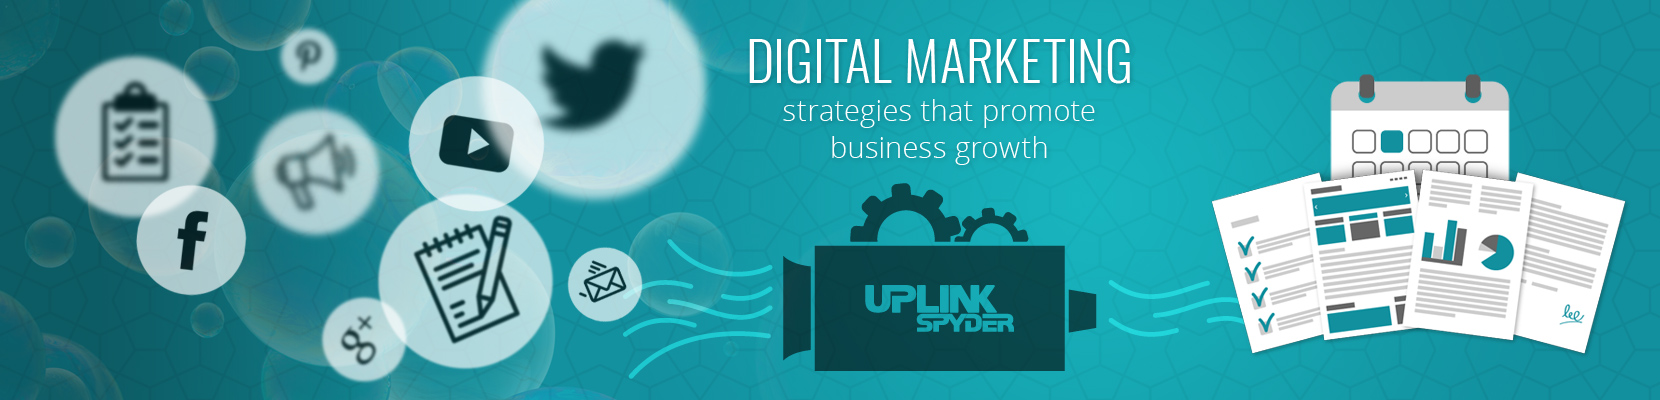 digital marketing strategies that promote business growth